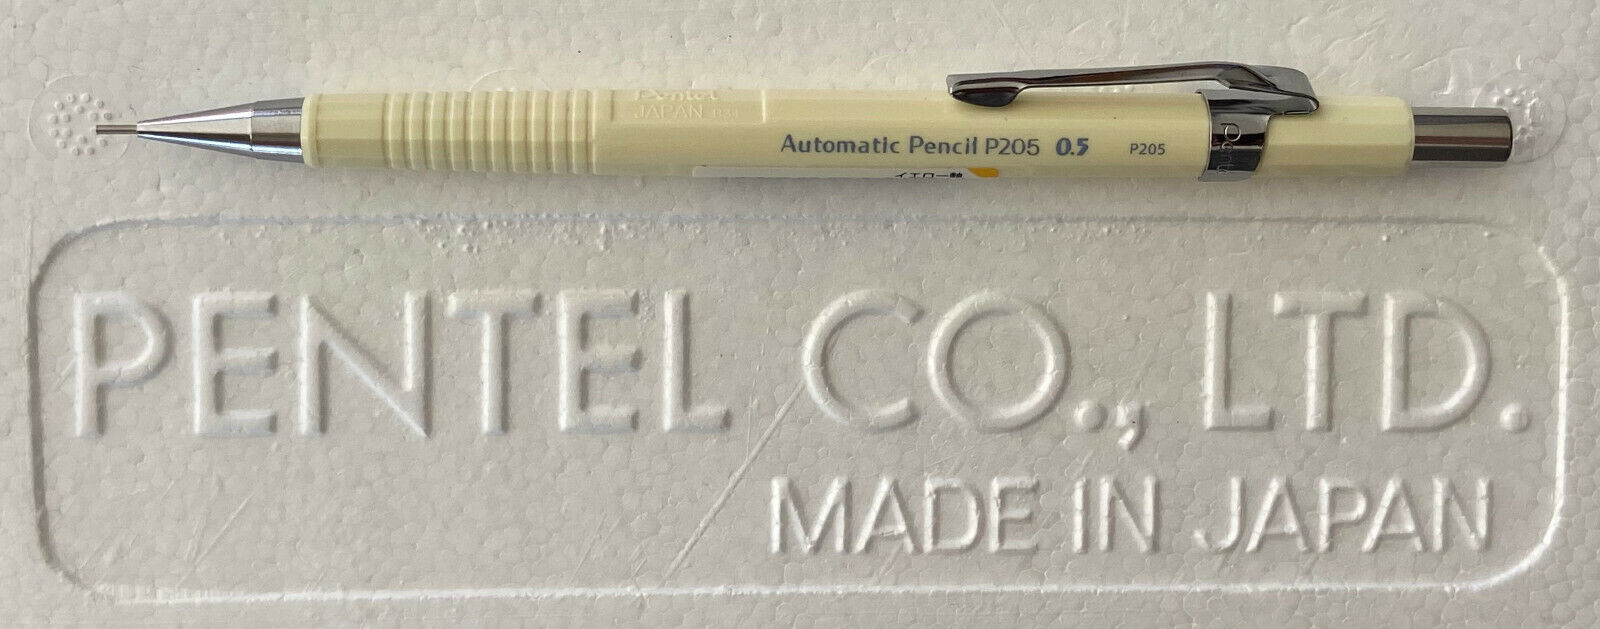 Pentel Sharp P205-GLF - Pale Yellow - Automatic Pencil P205 0.5 P205 - 0.5mm 